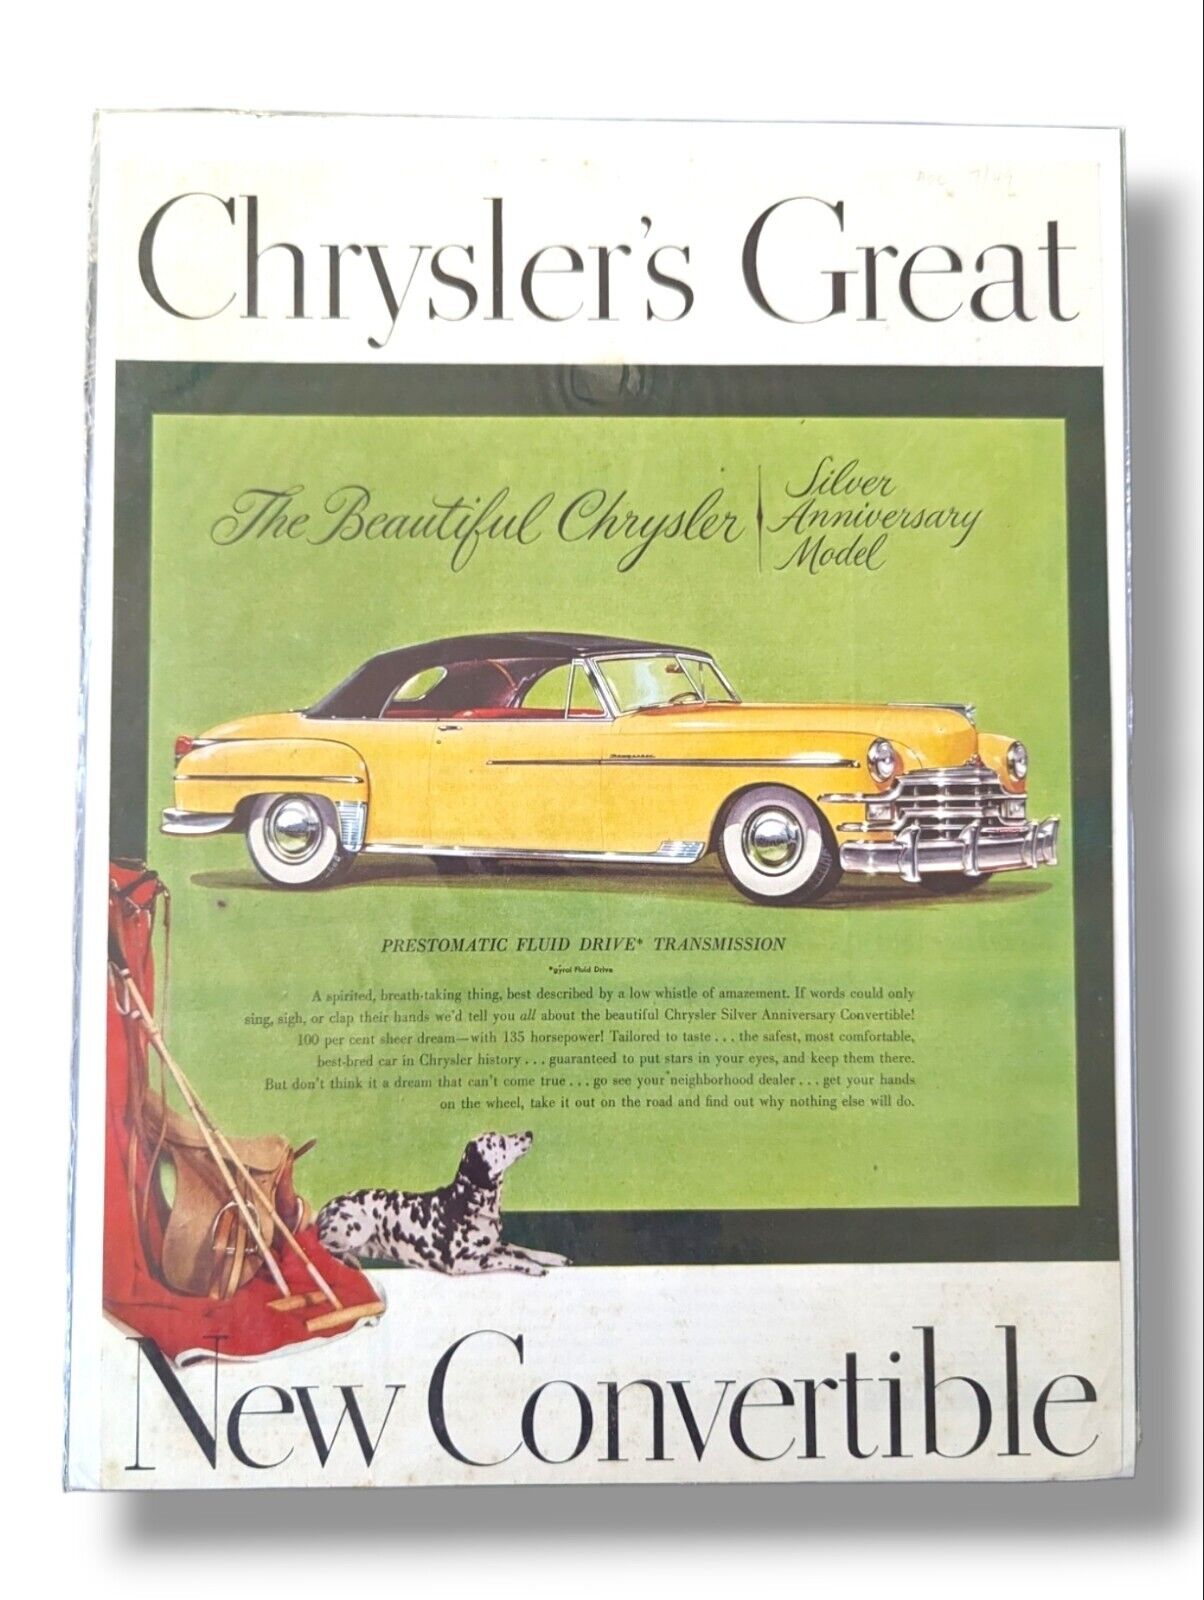 1949 CHRYSLER SILVER ANNIVERSARY MODEL PRESTOMATIC FLUID DRIVE  AD PRINT 